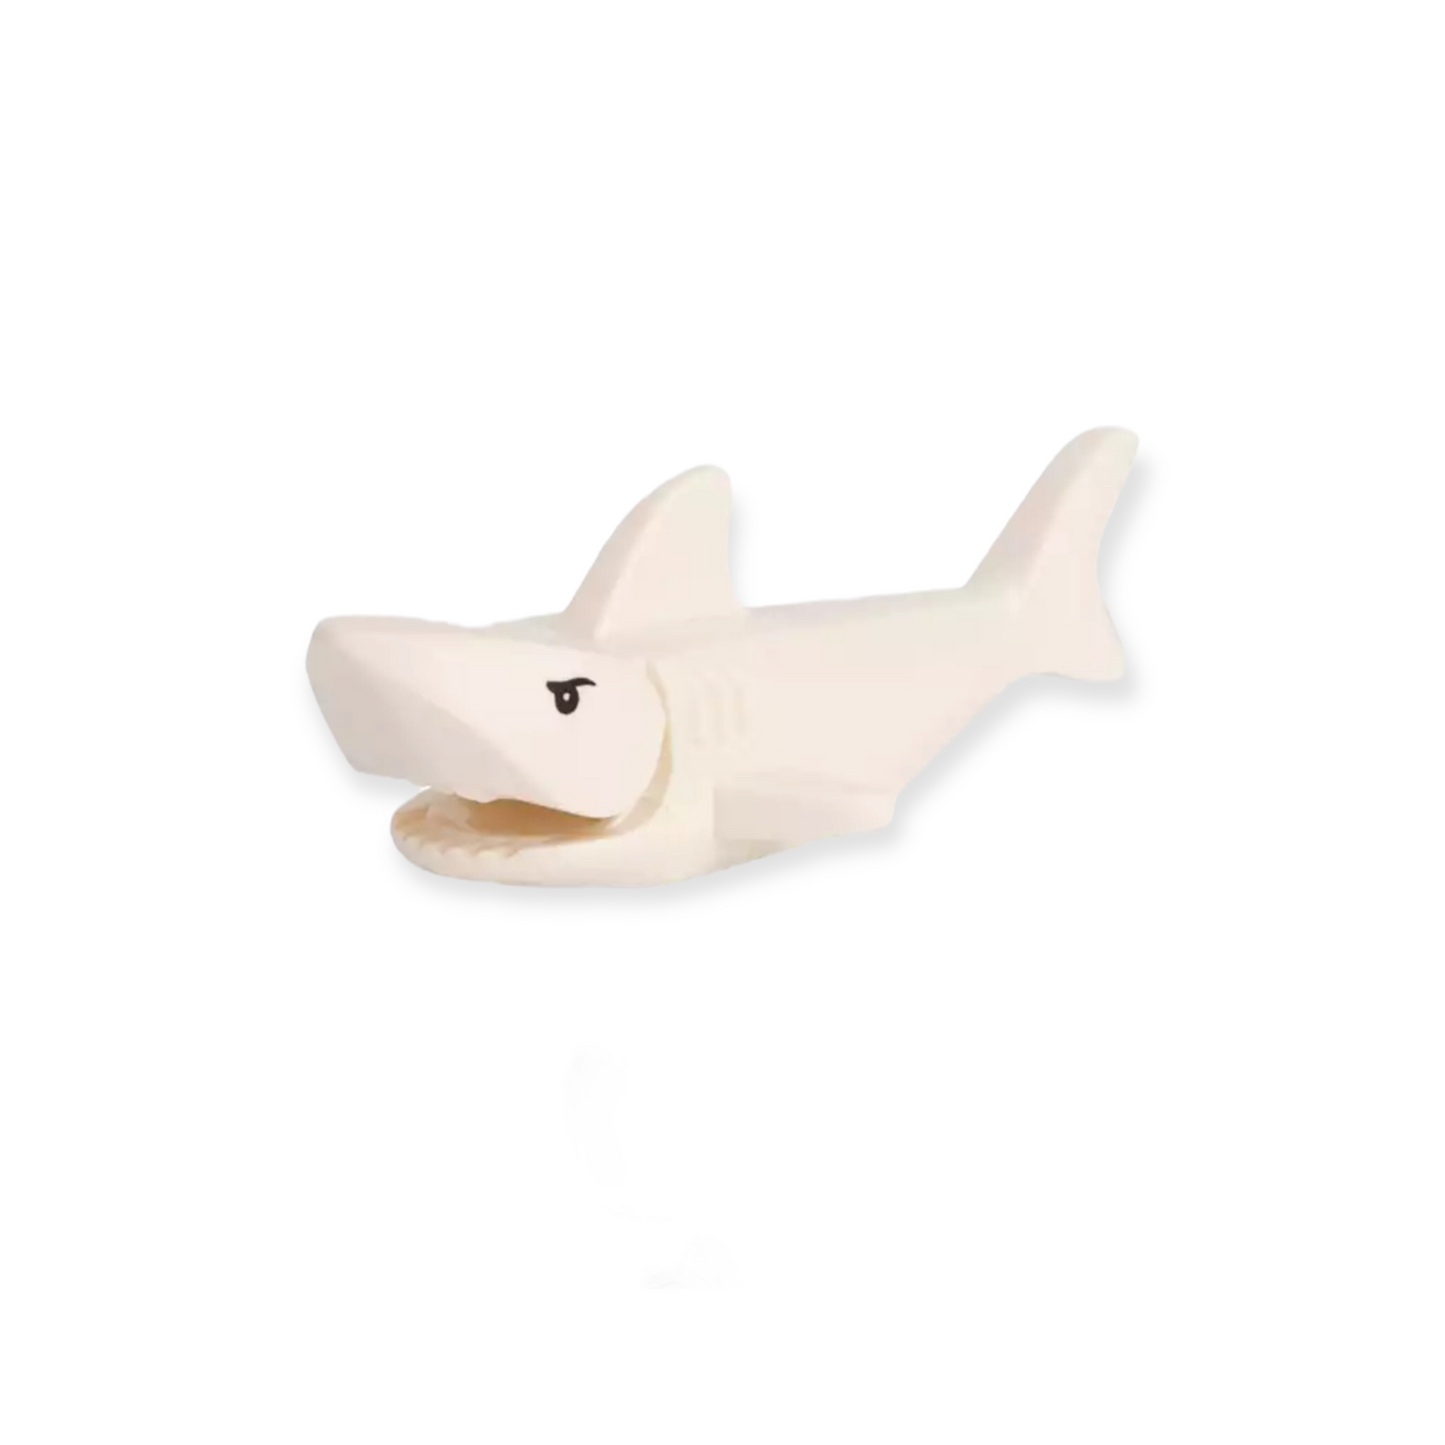 Hai - Grau oder Weiß